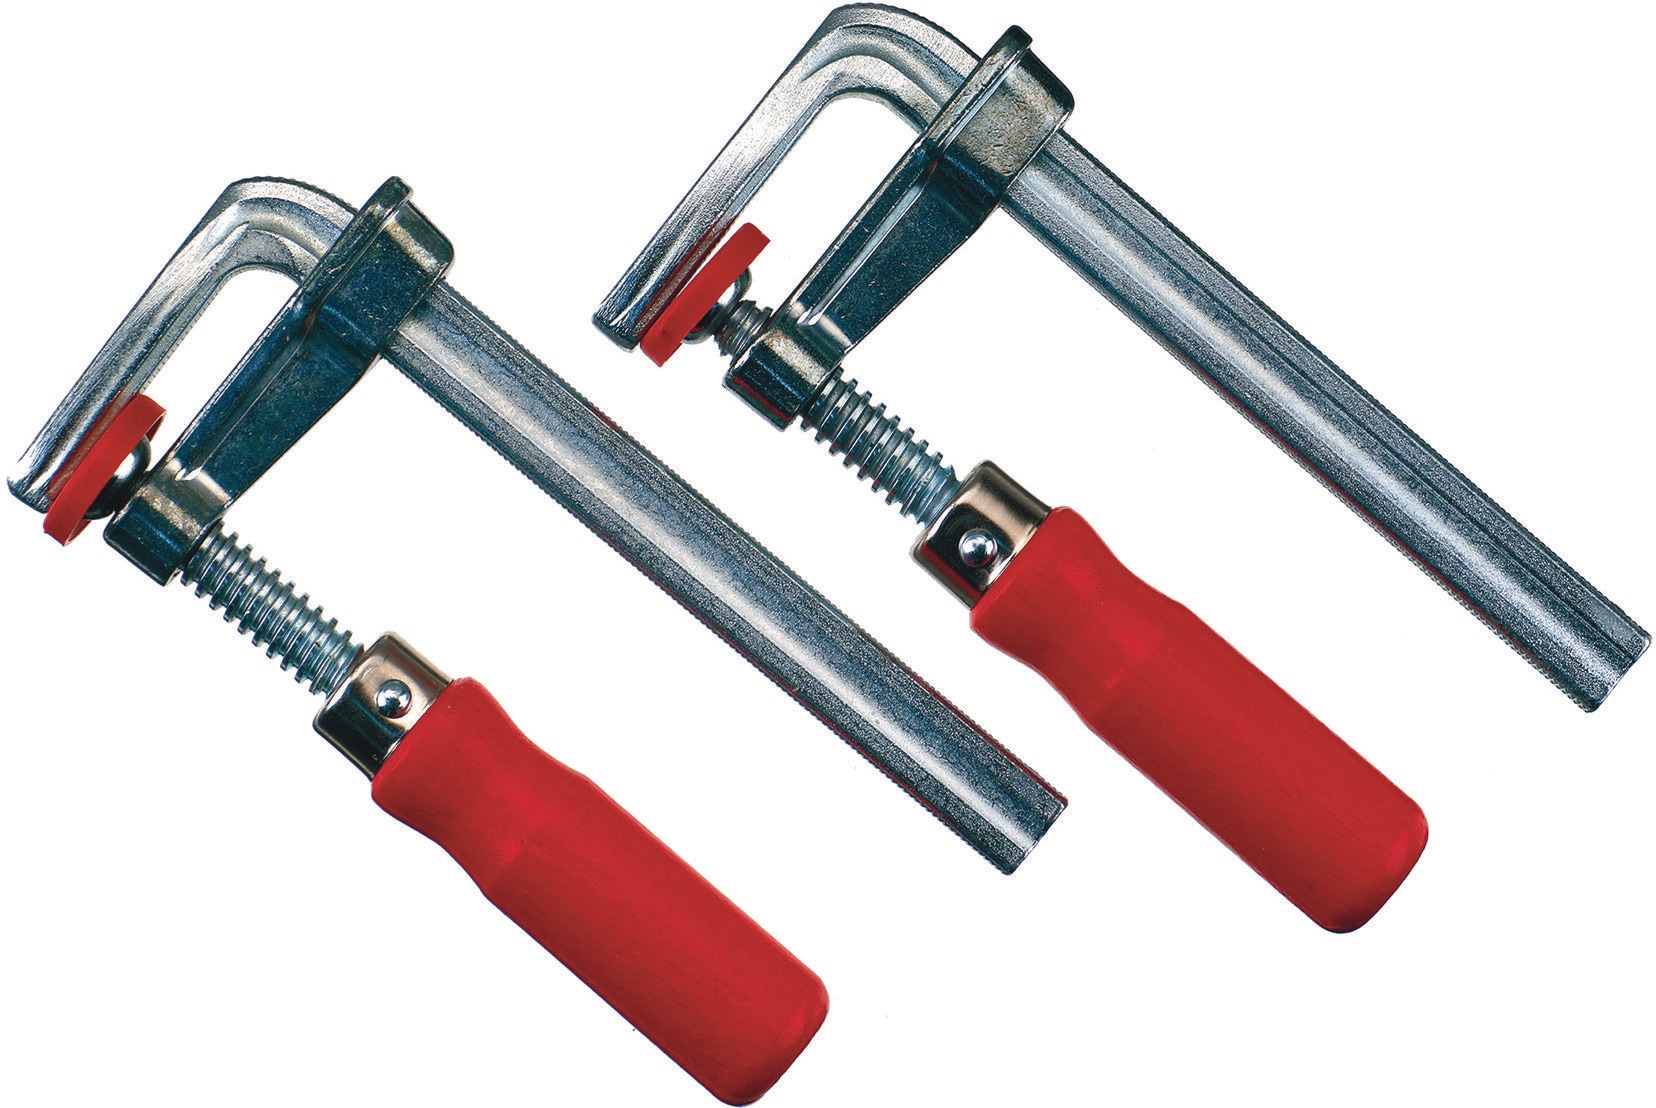 SCREW CLAMP - Accessories for Circular and Cut-Off Saws - Hilti Canada